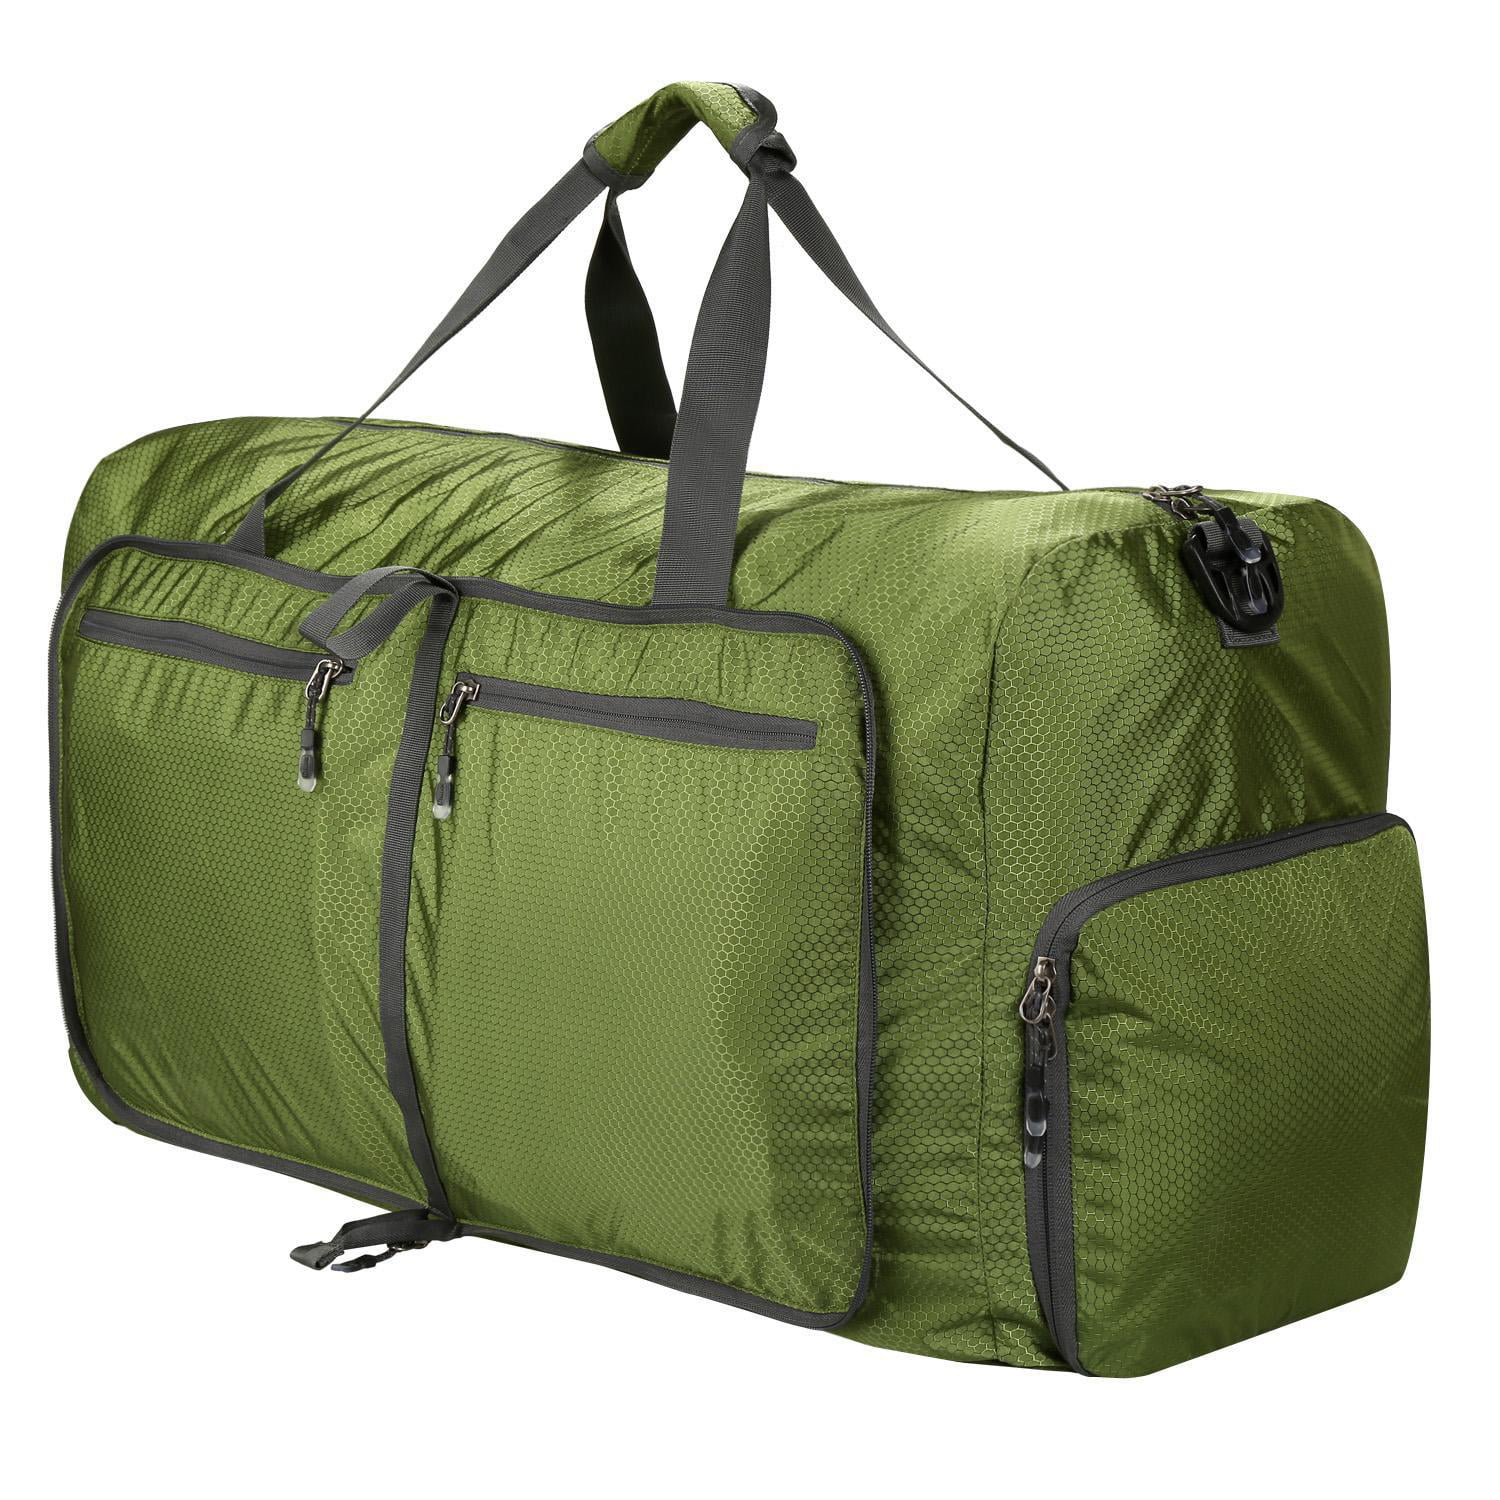 L Camping Duffel Bag Large Size Packable Travel Duffle Bags For Men